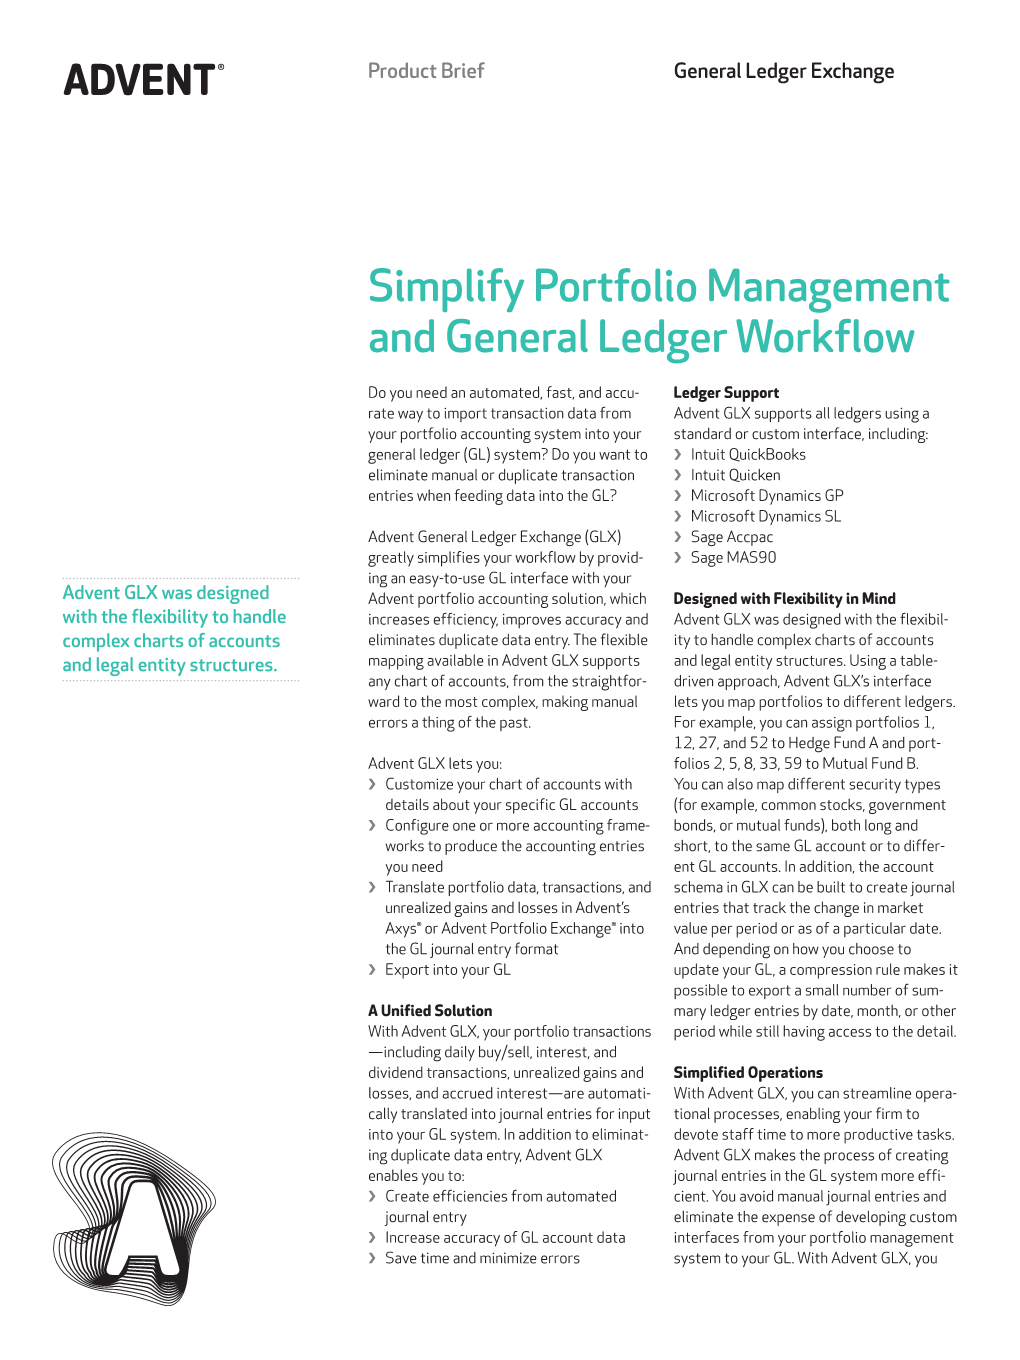 Simplify Portfolio Management and General Ledger Workflow